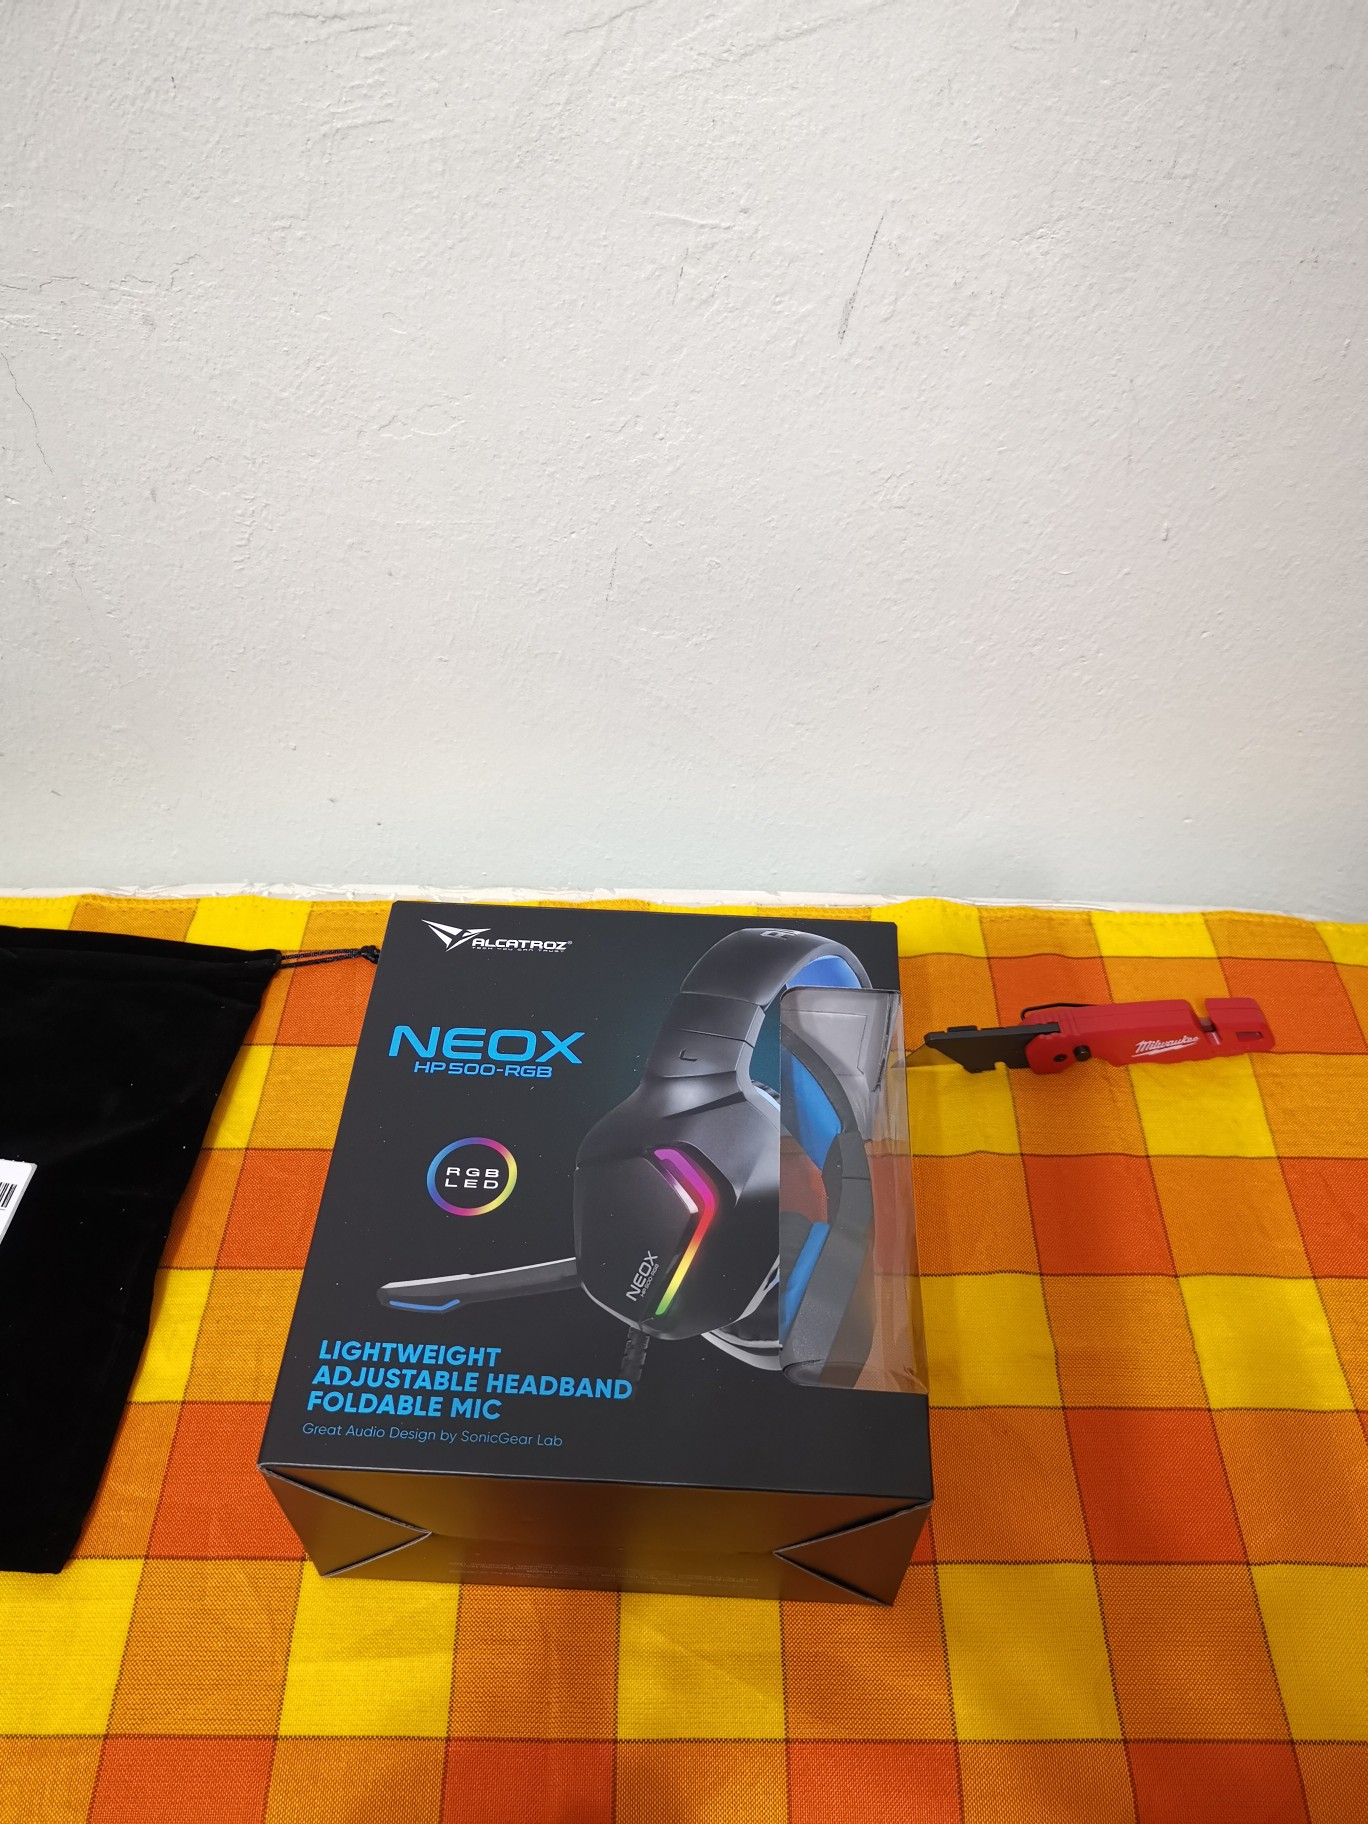 Alcatroz NEOX HP500 RGB Gaming Headset